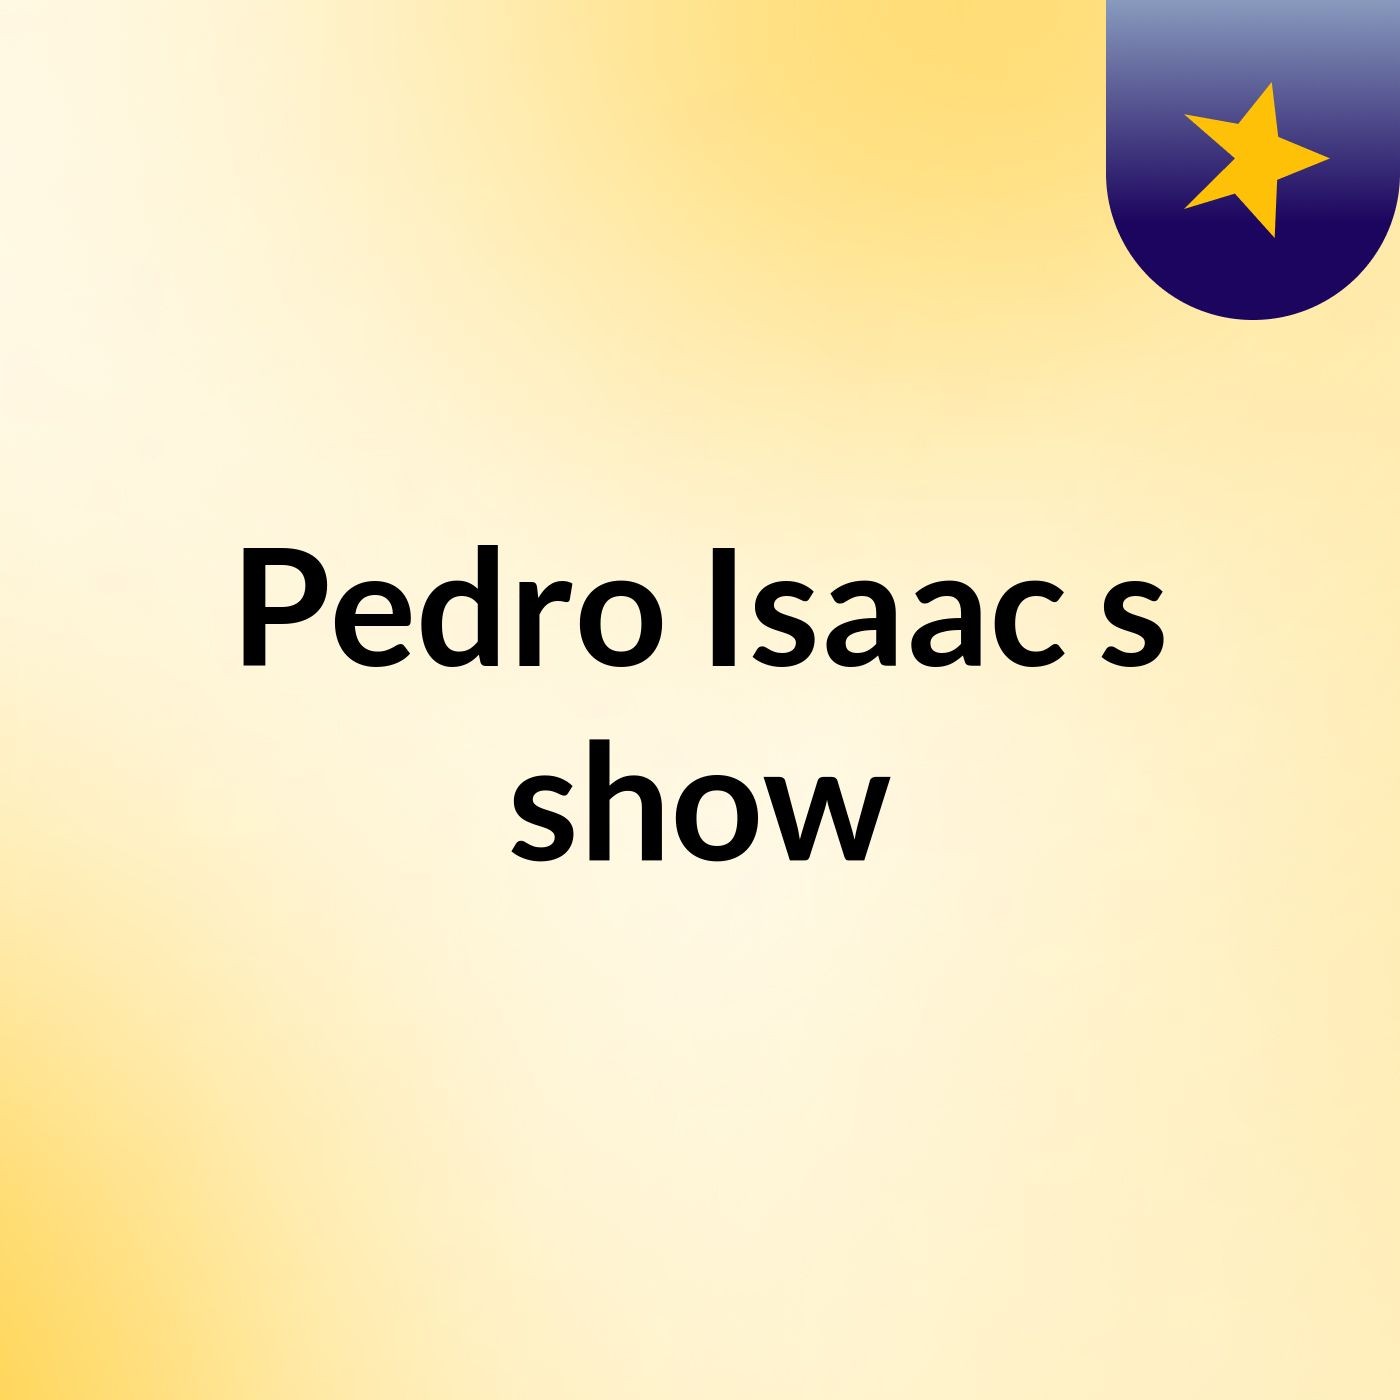 Pedro Isaac's show